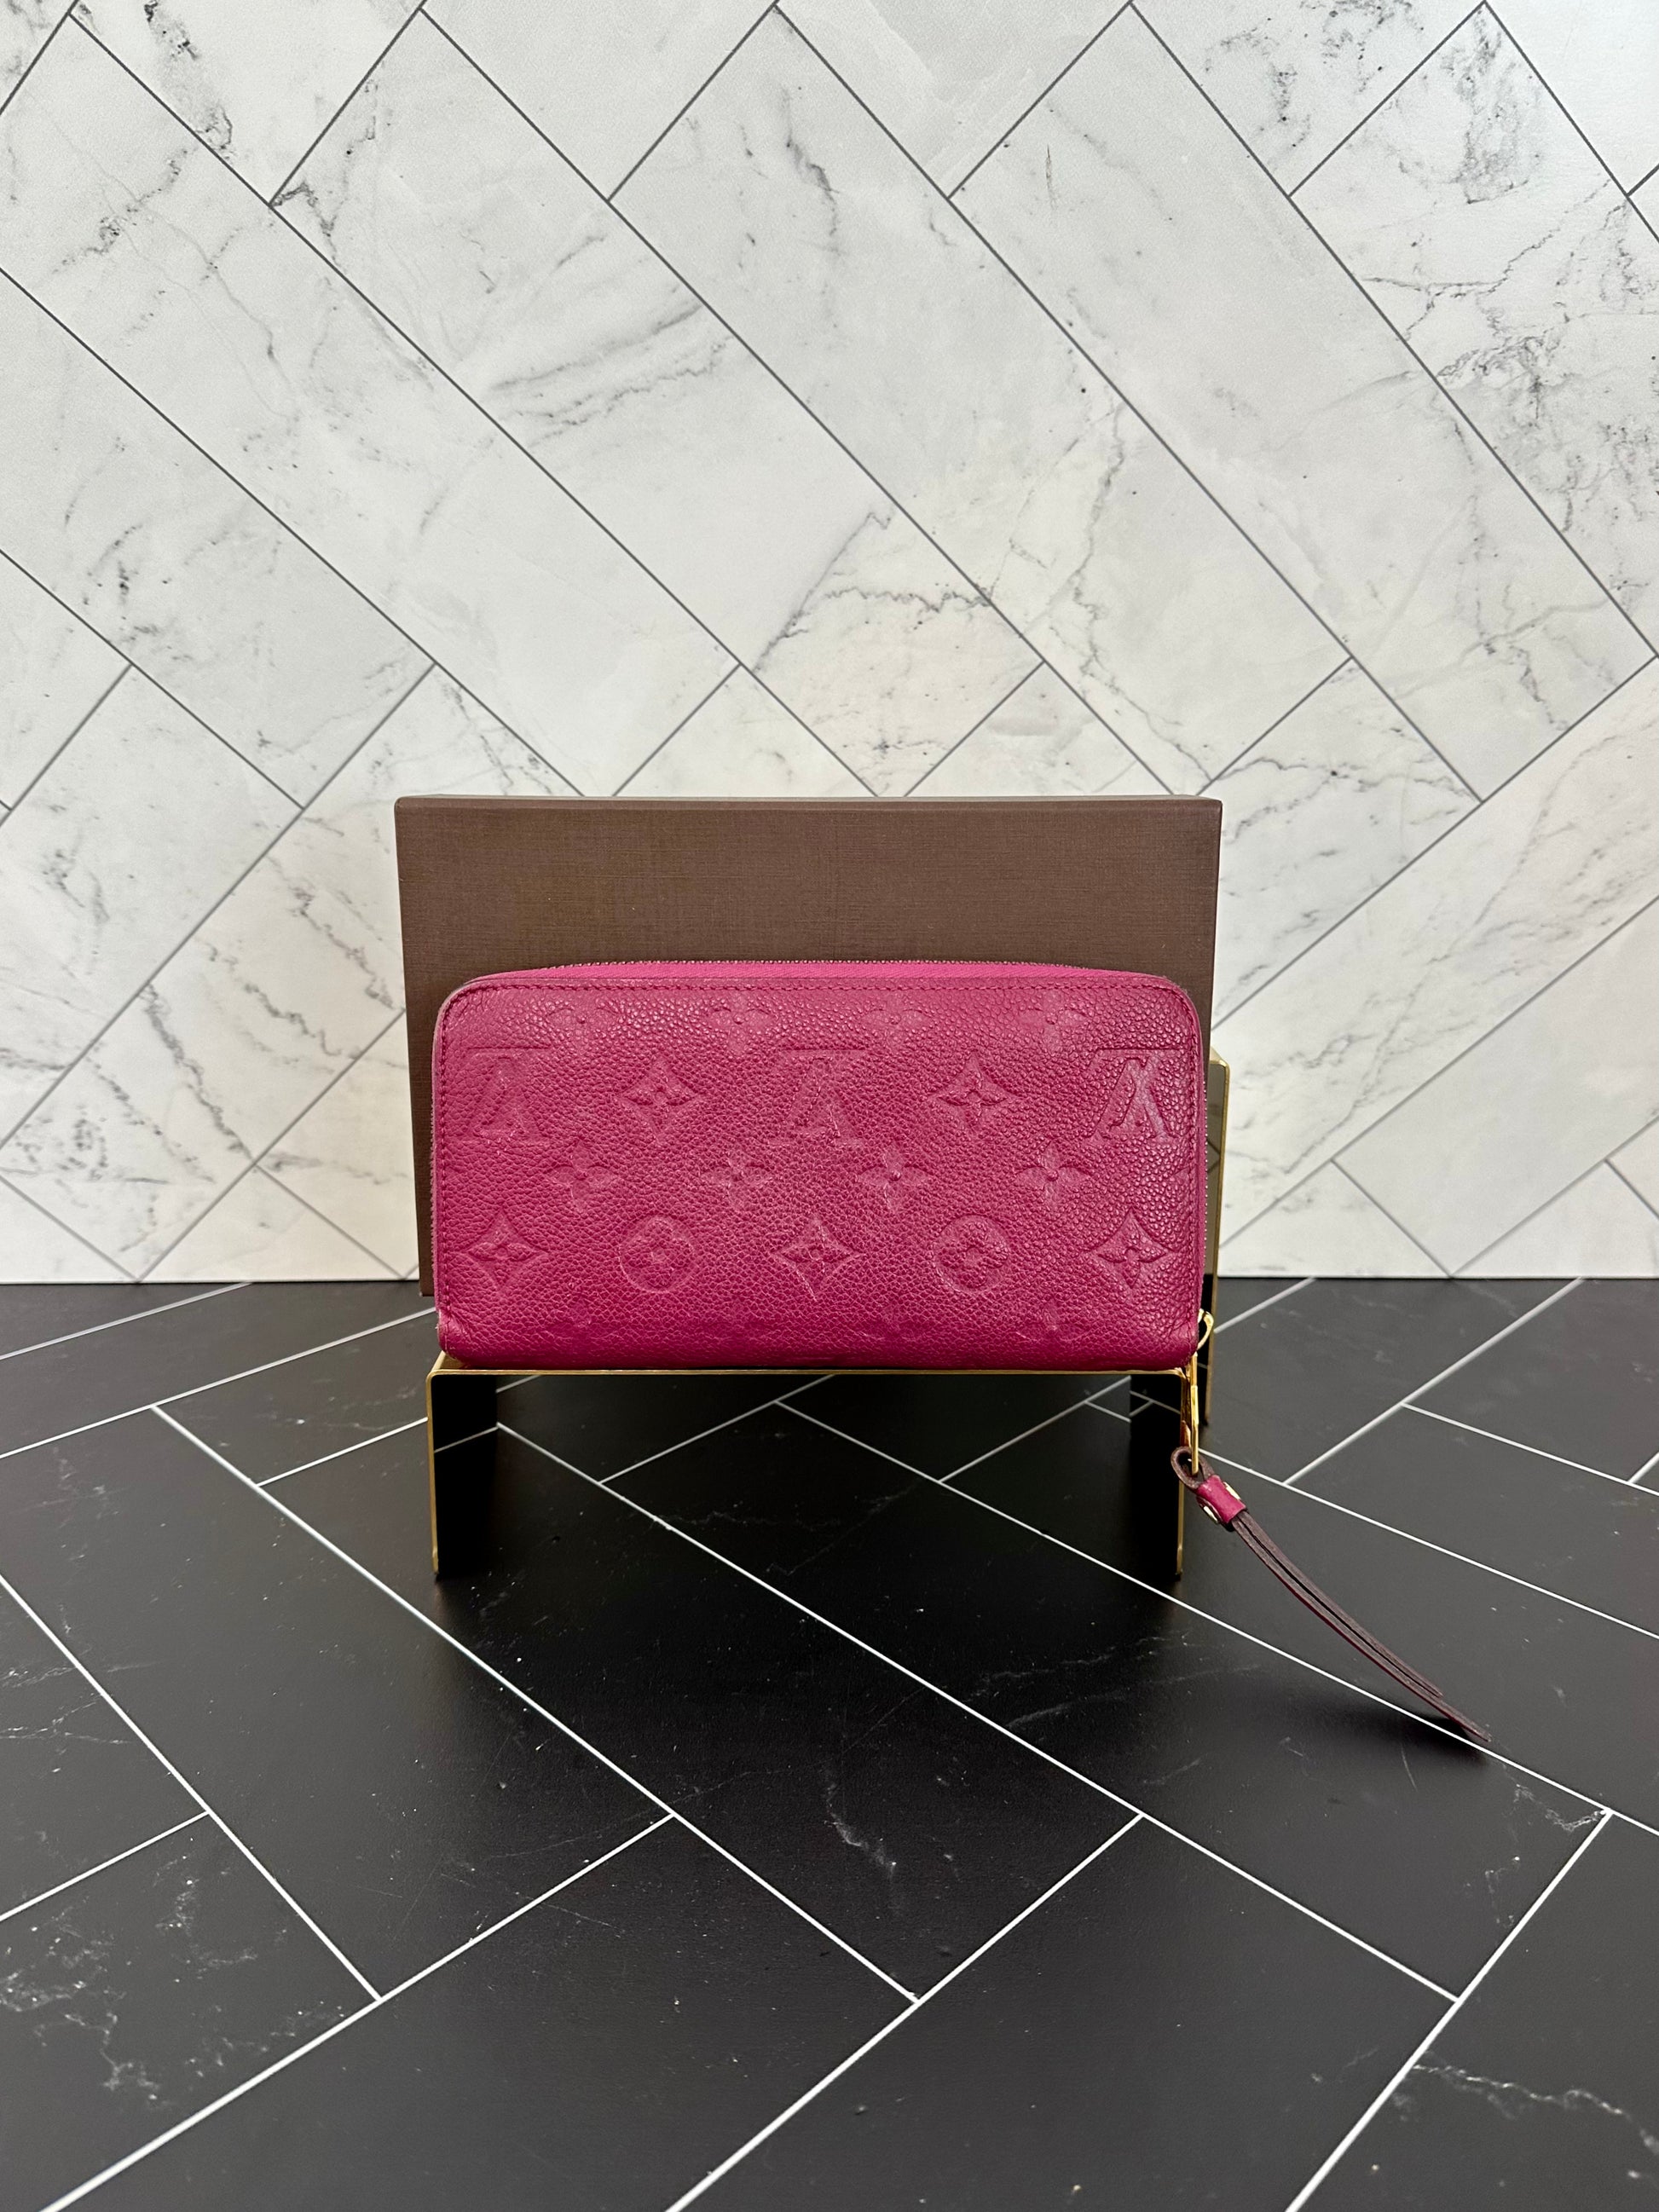 Louis Vuitton Purple Empreinte Leather Zippy Wallet – The Don's Luxury Goods